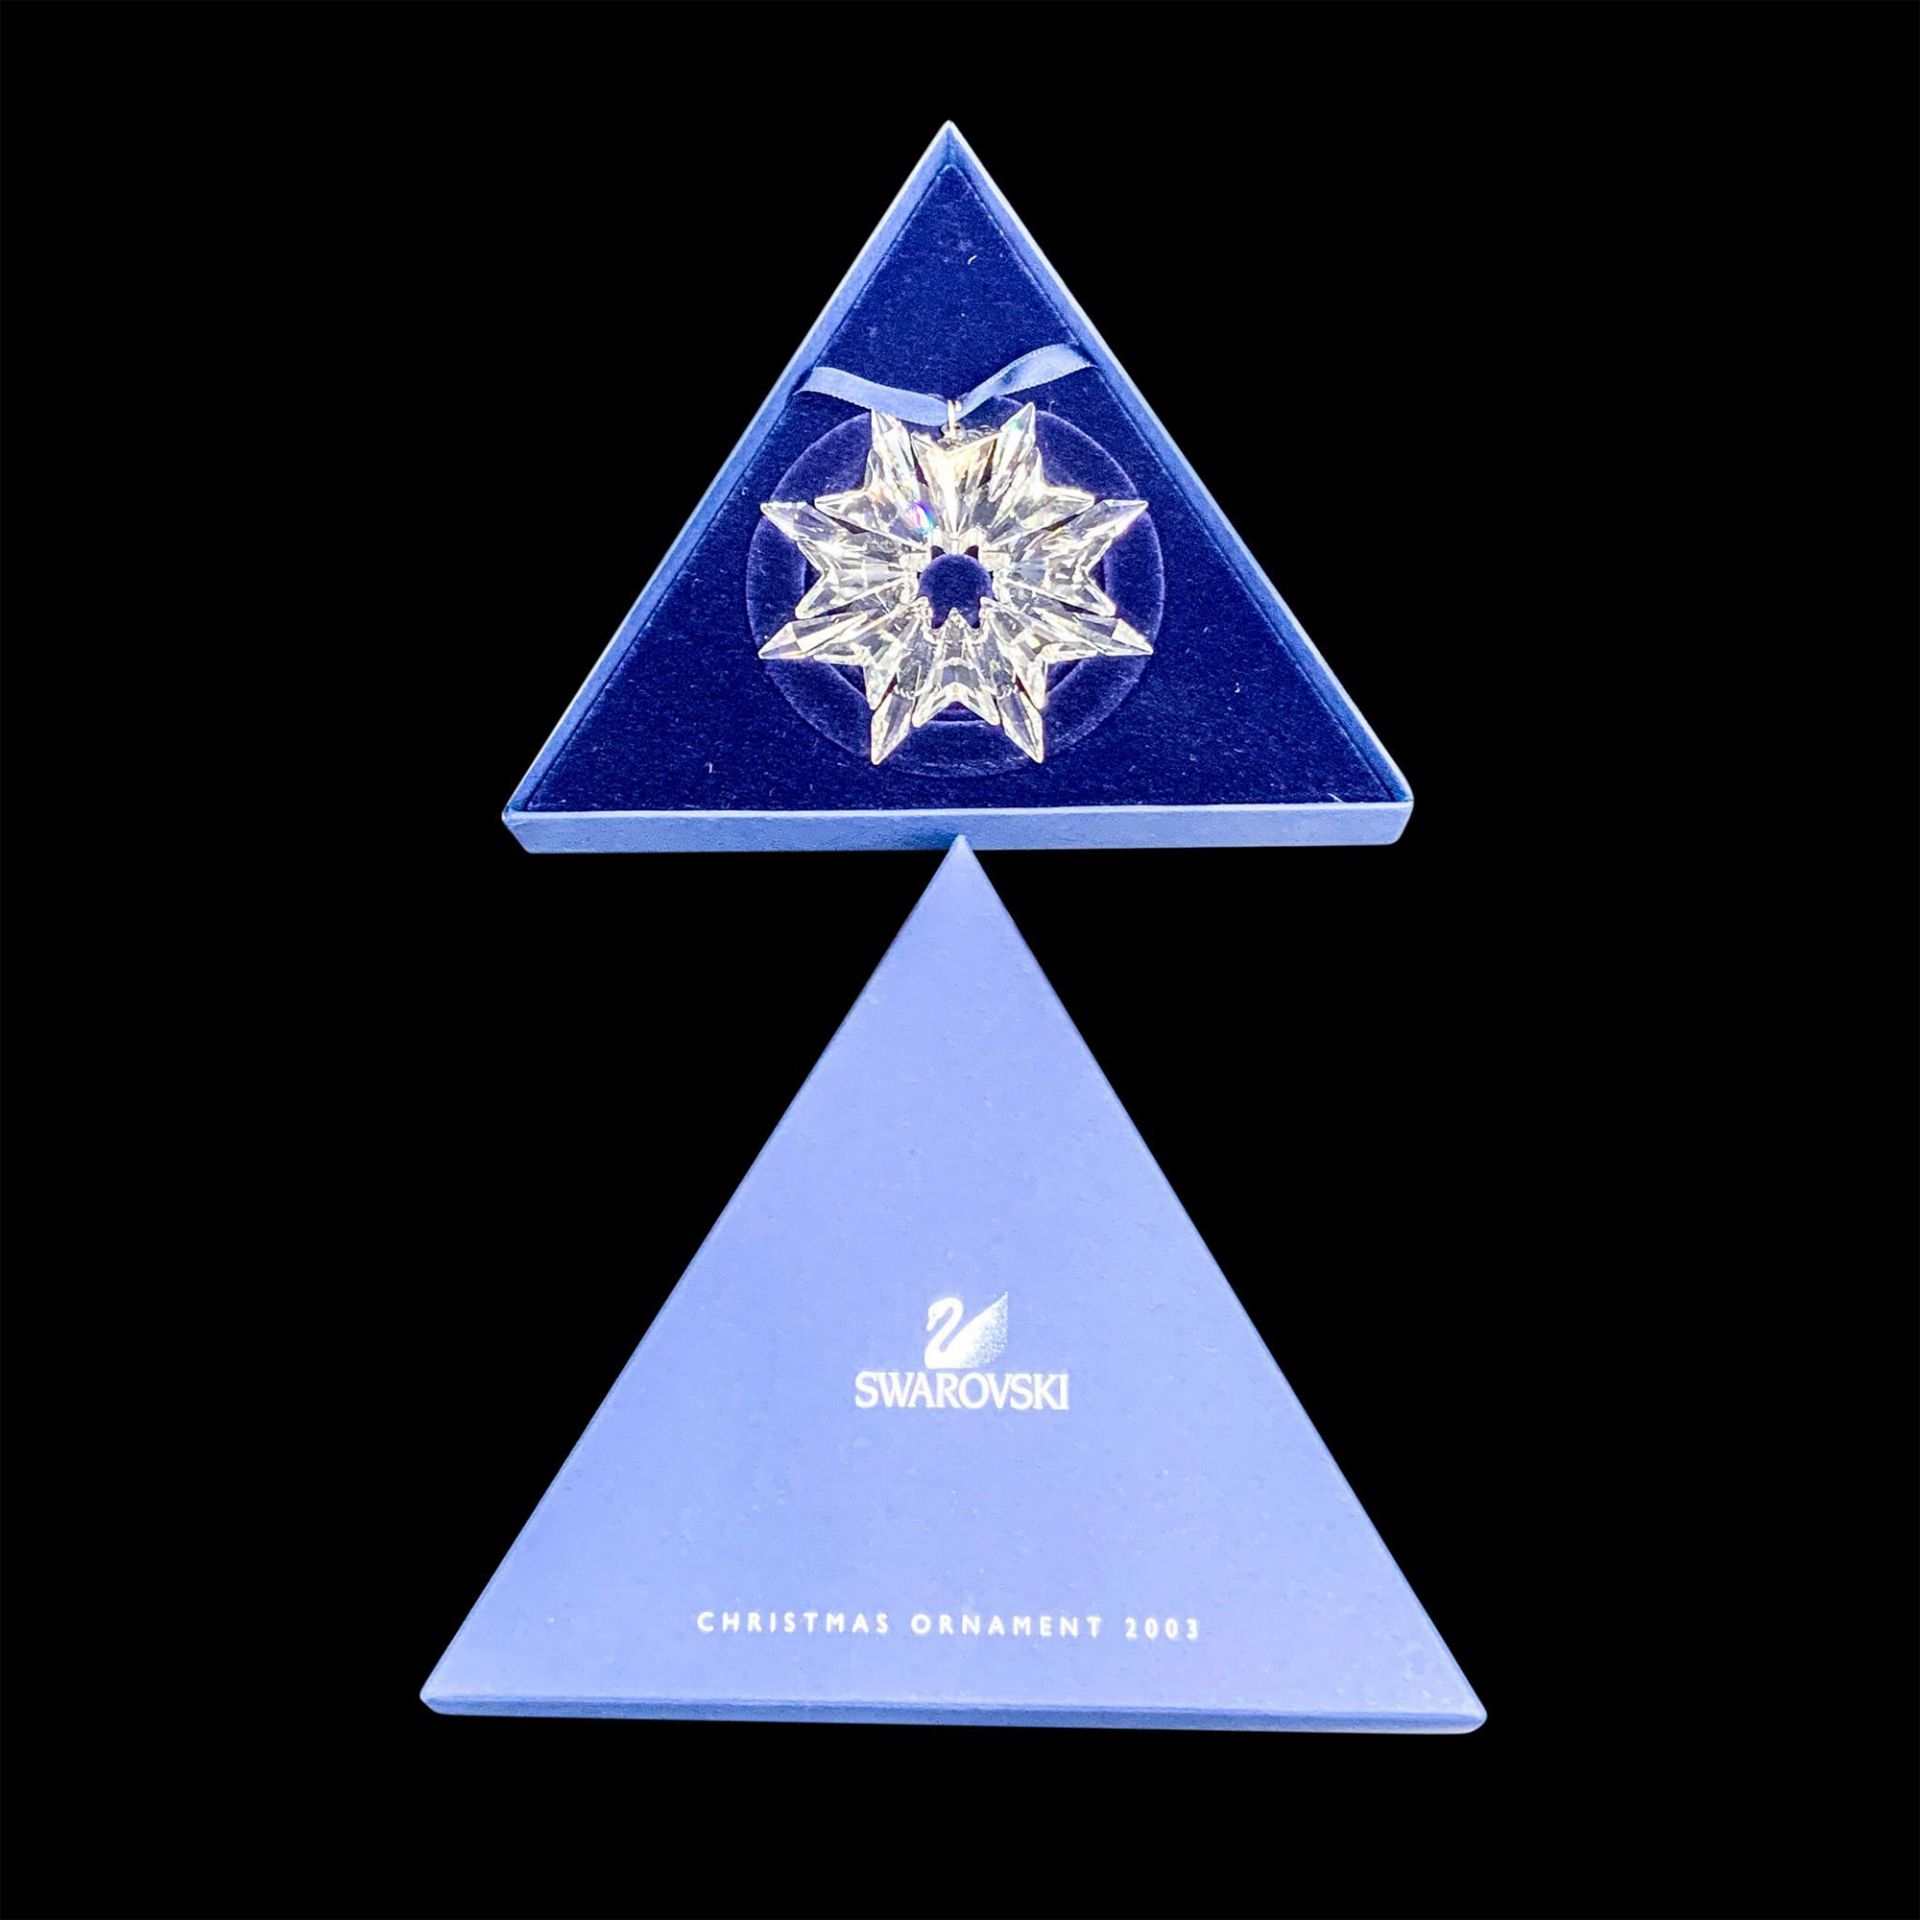 Swarovski Crystal 2003 Annual Christmas Ornament - Image 3 of 3